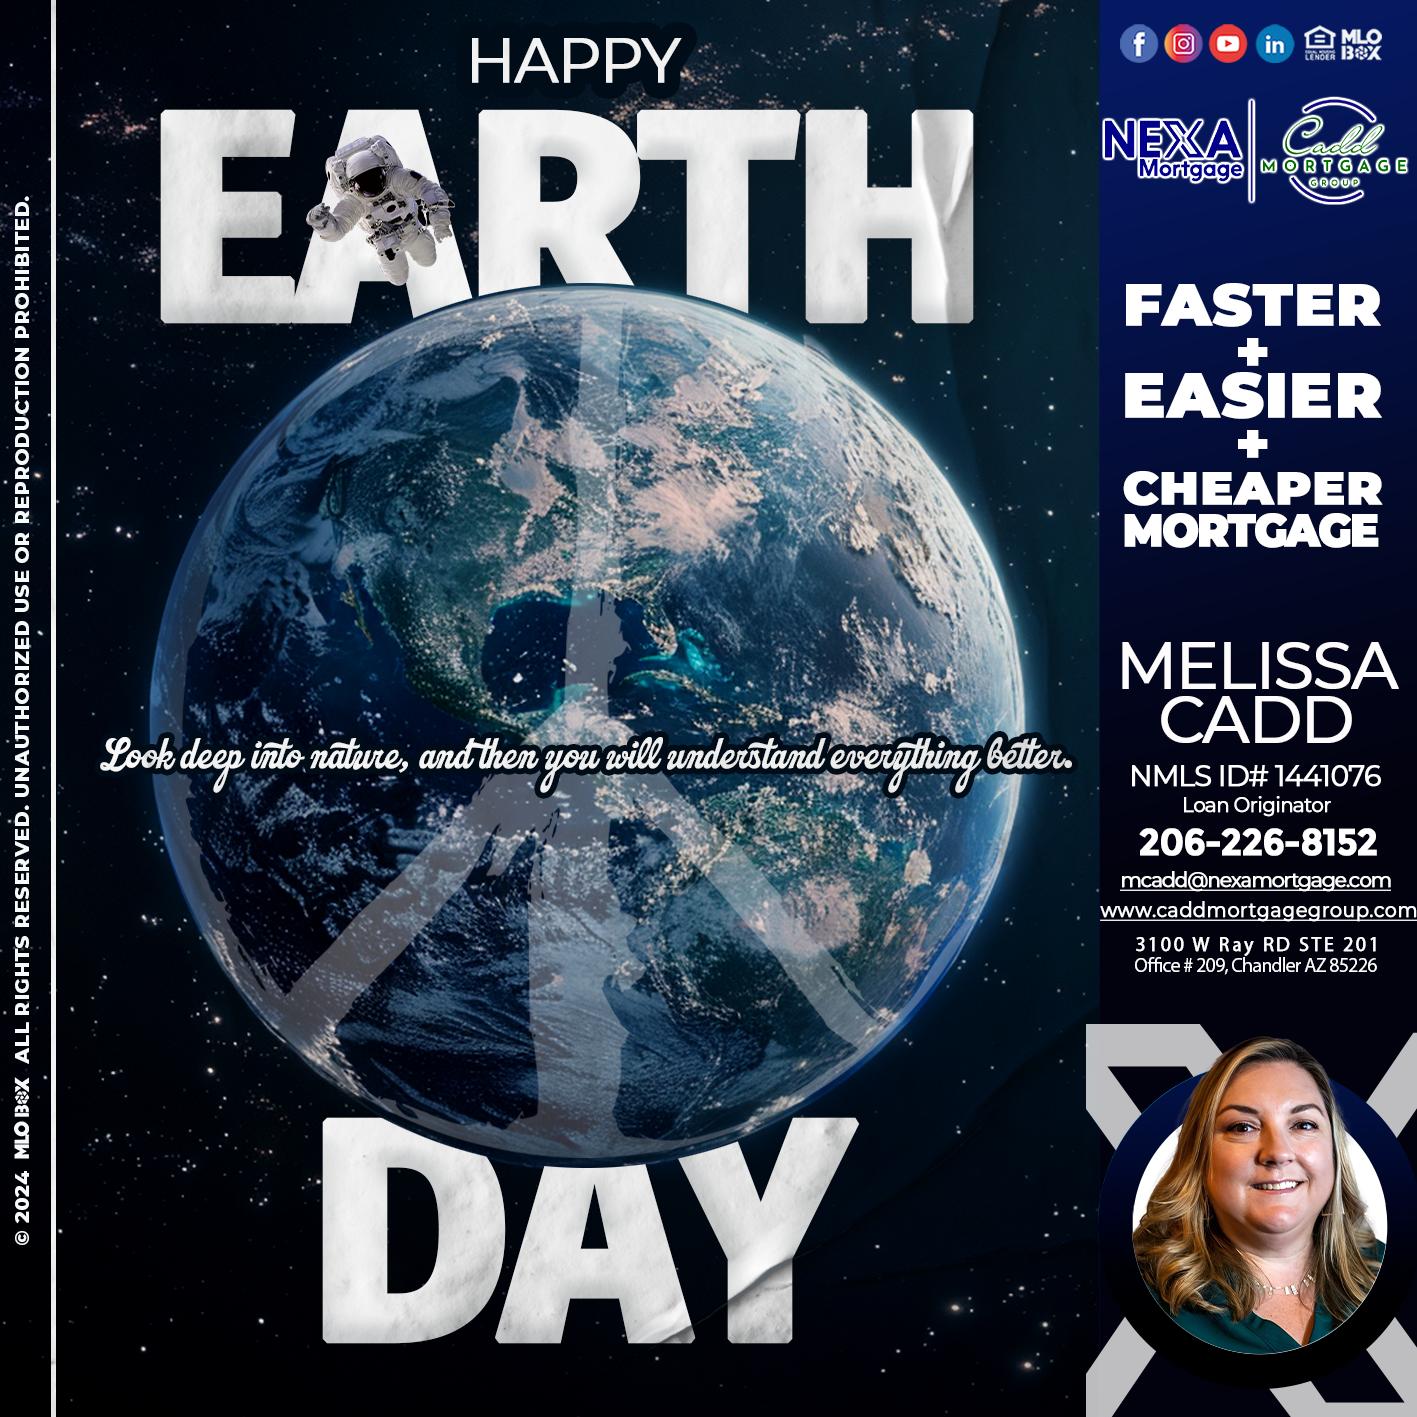 earth day - Melissa Cadd -Loan Originator